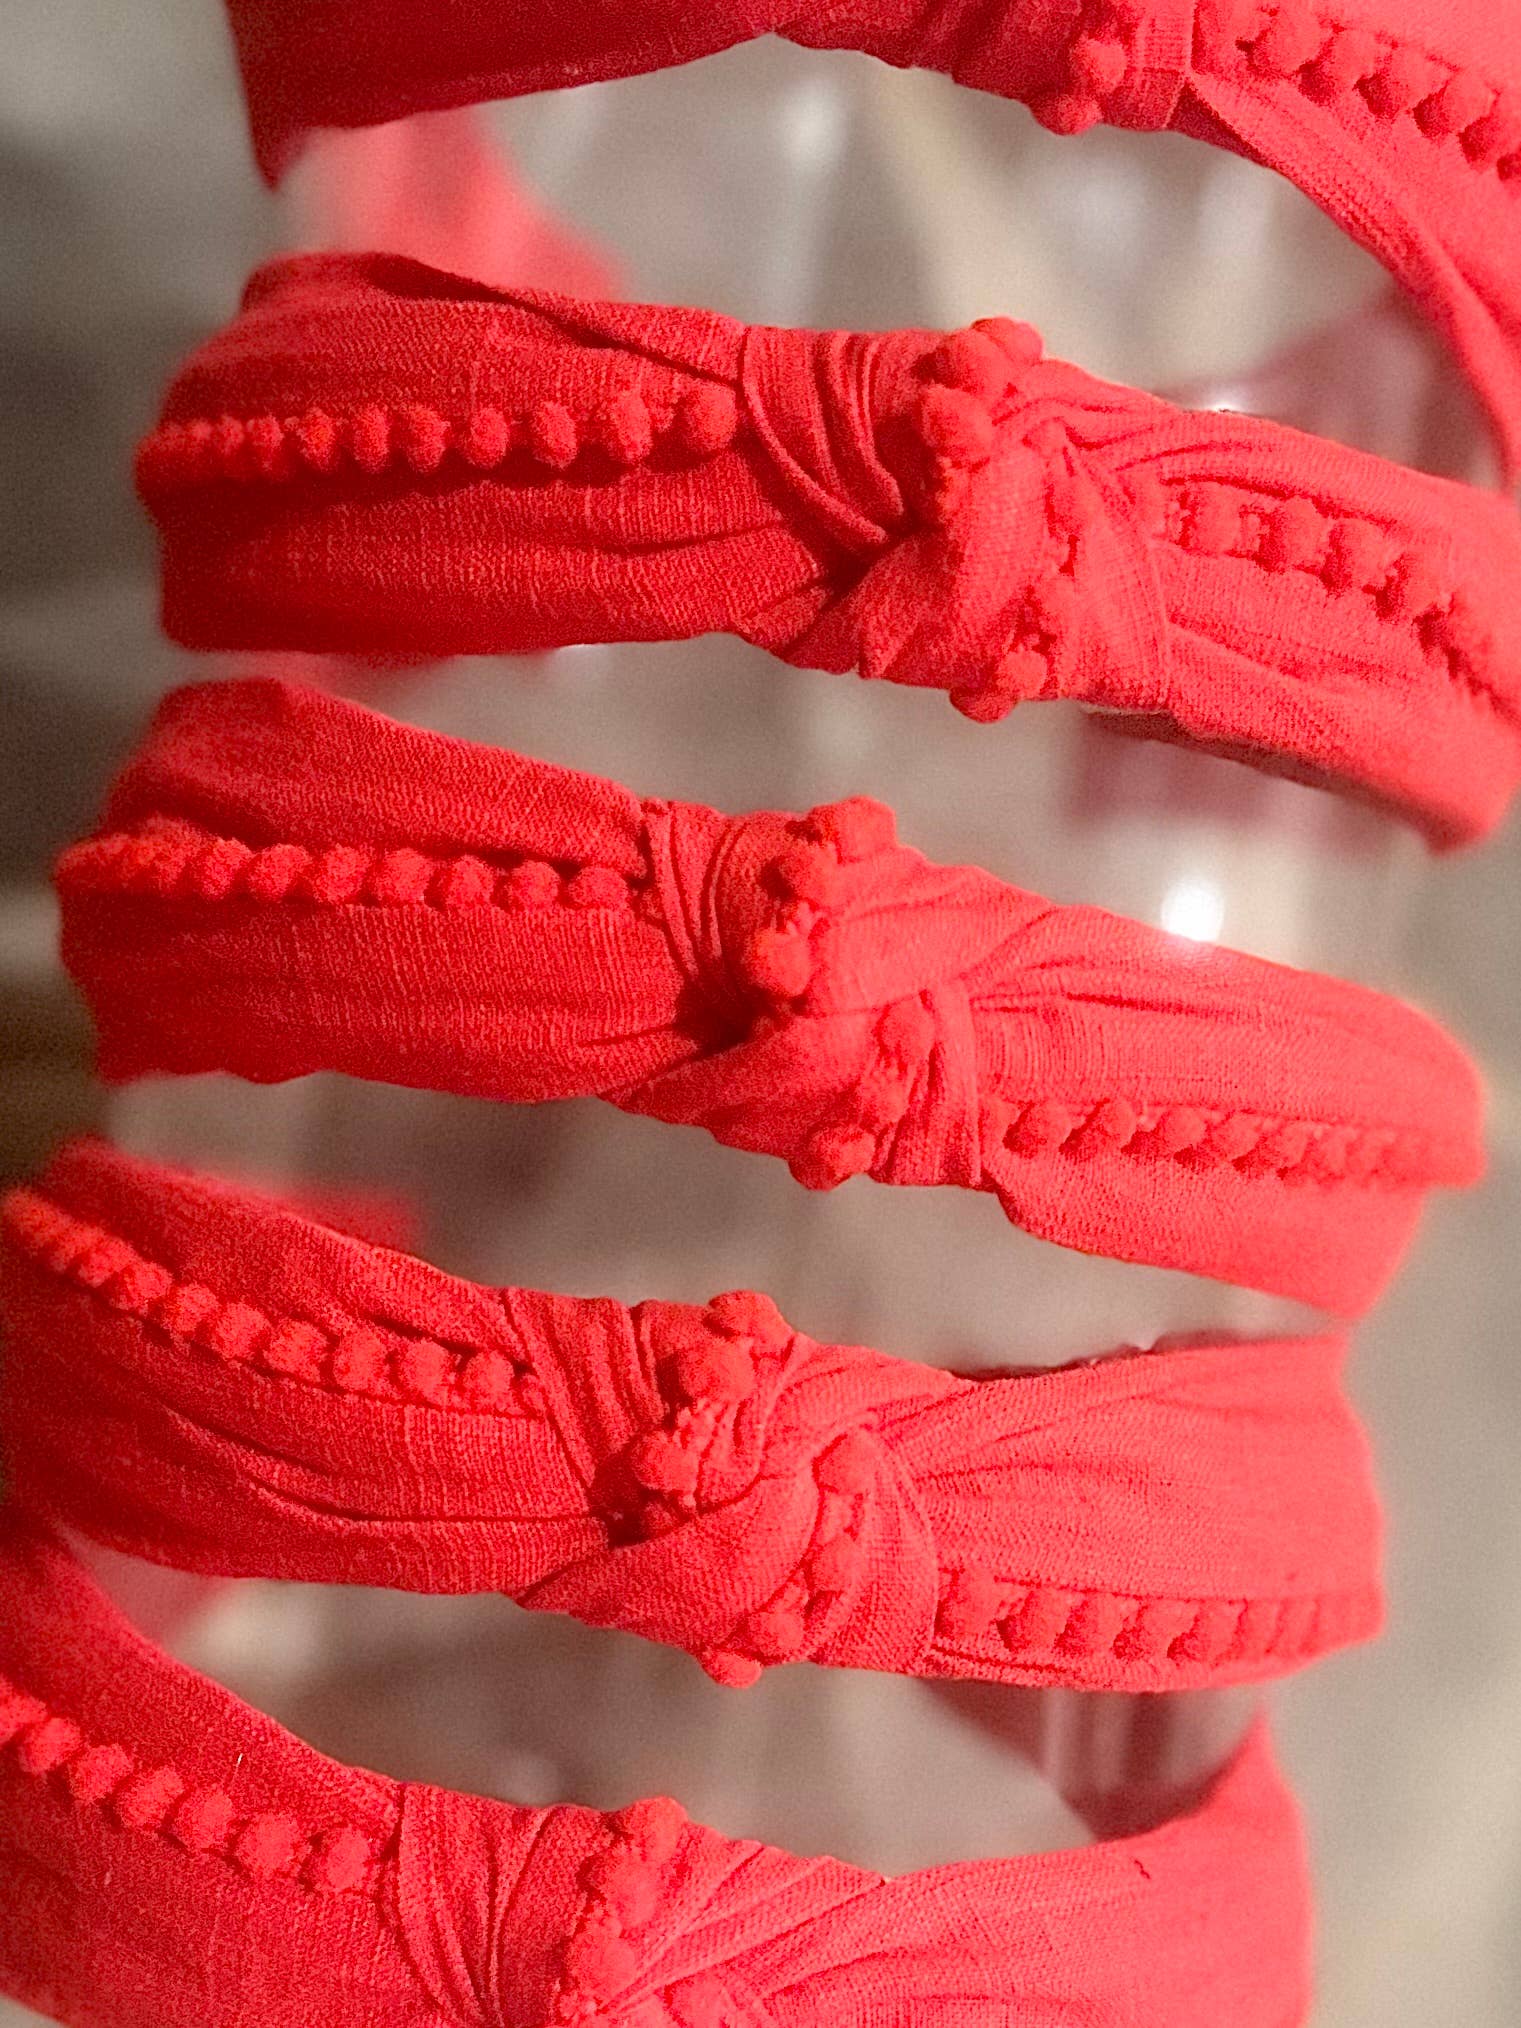 Lolo Headbands and Accessories - Preppy Pom Knot Headband - Red